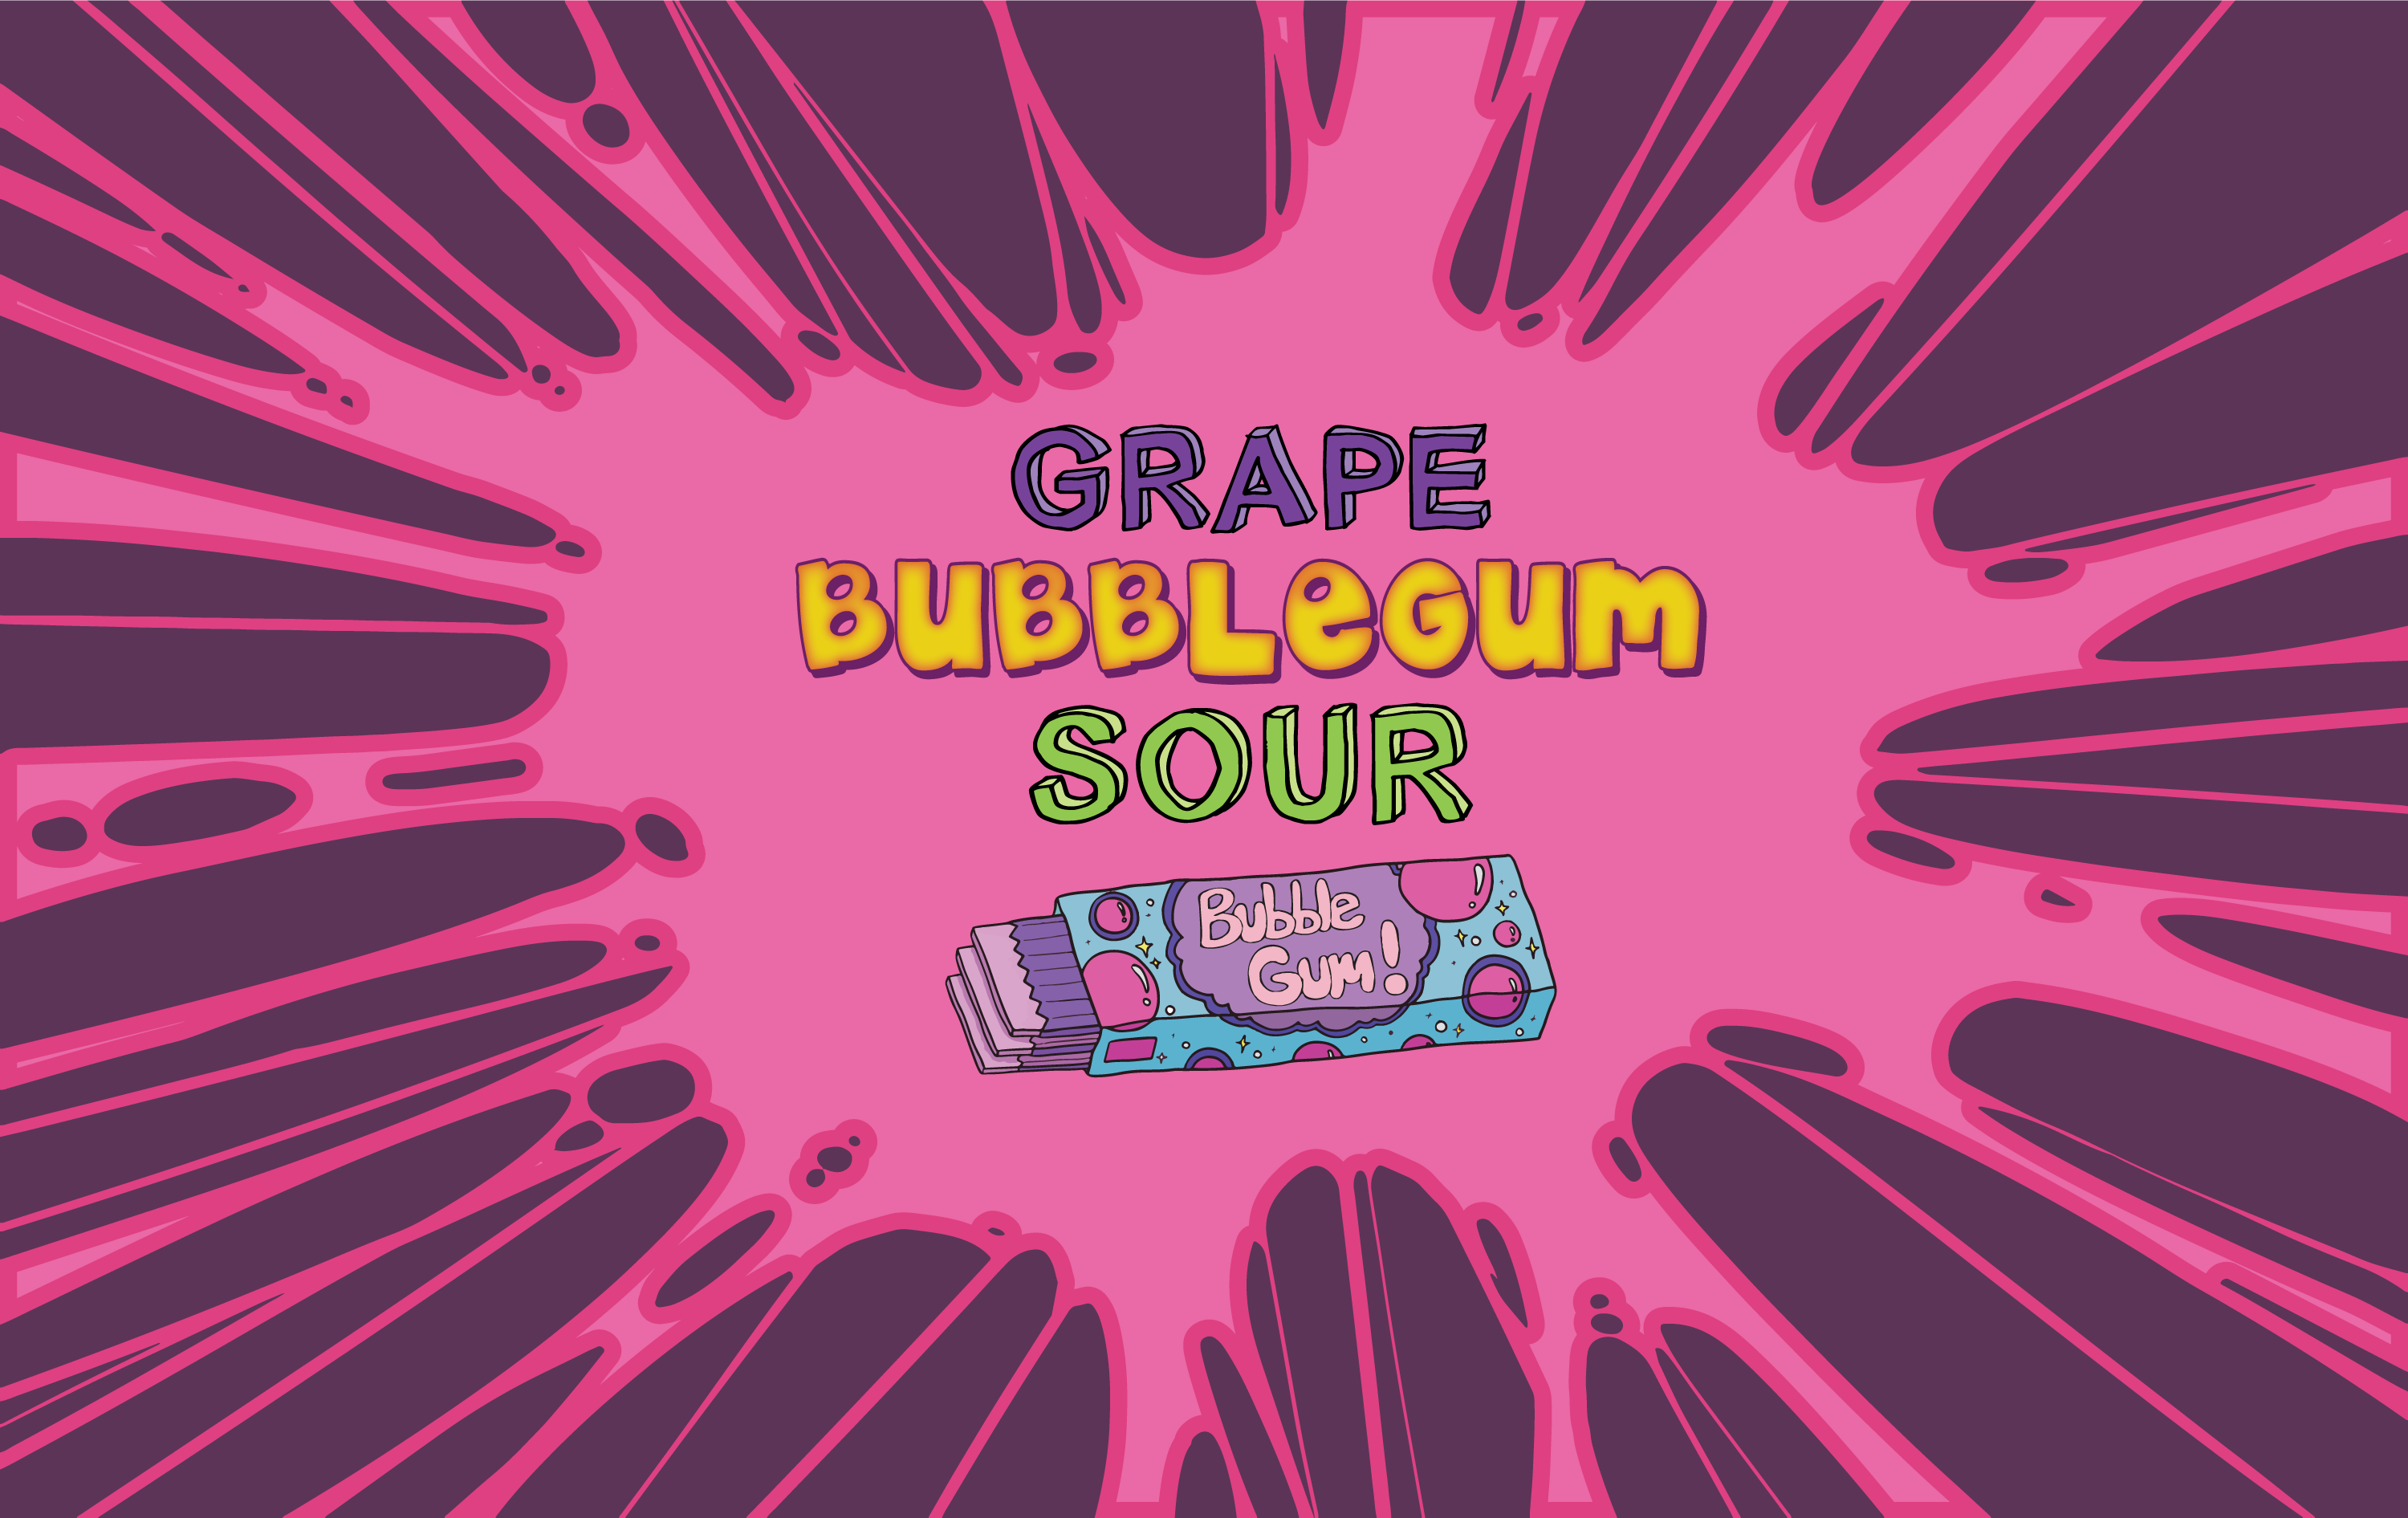 Grape Bubblegum Sour - GABS 2019